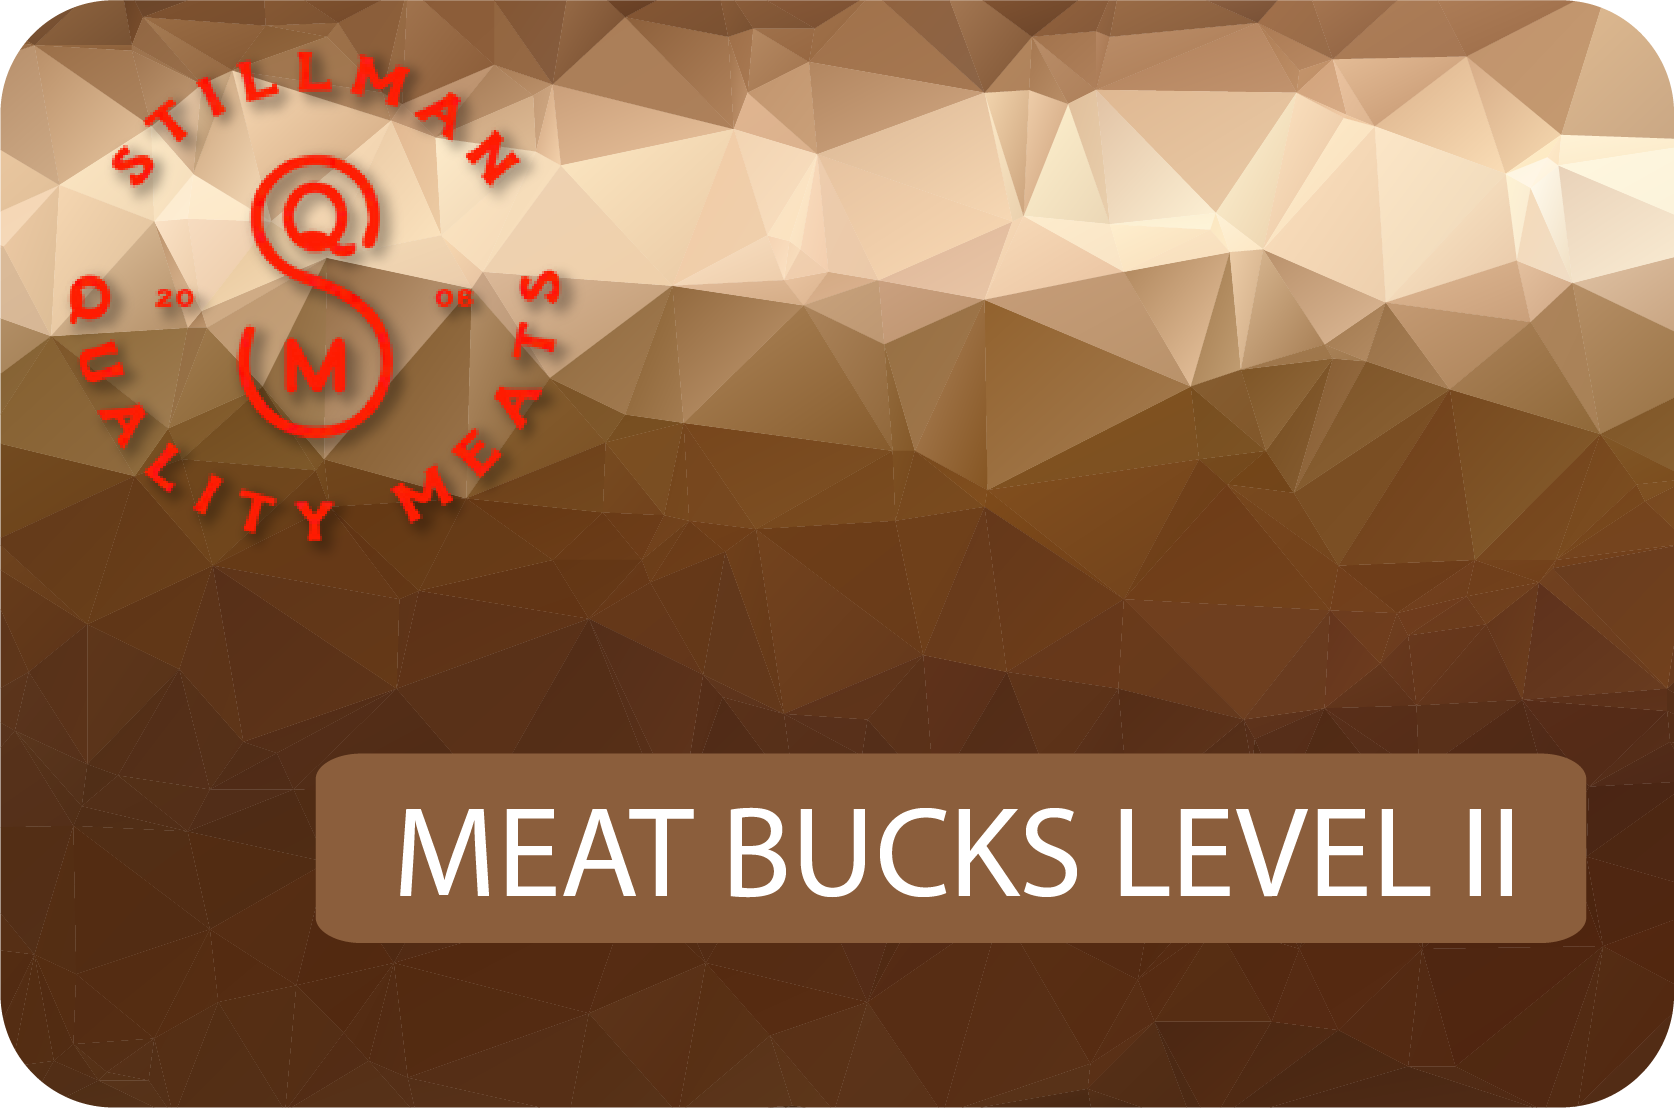 Meat Bucks Level II: $500 → Get $560 (12% savings!)